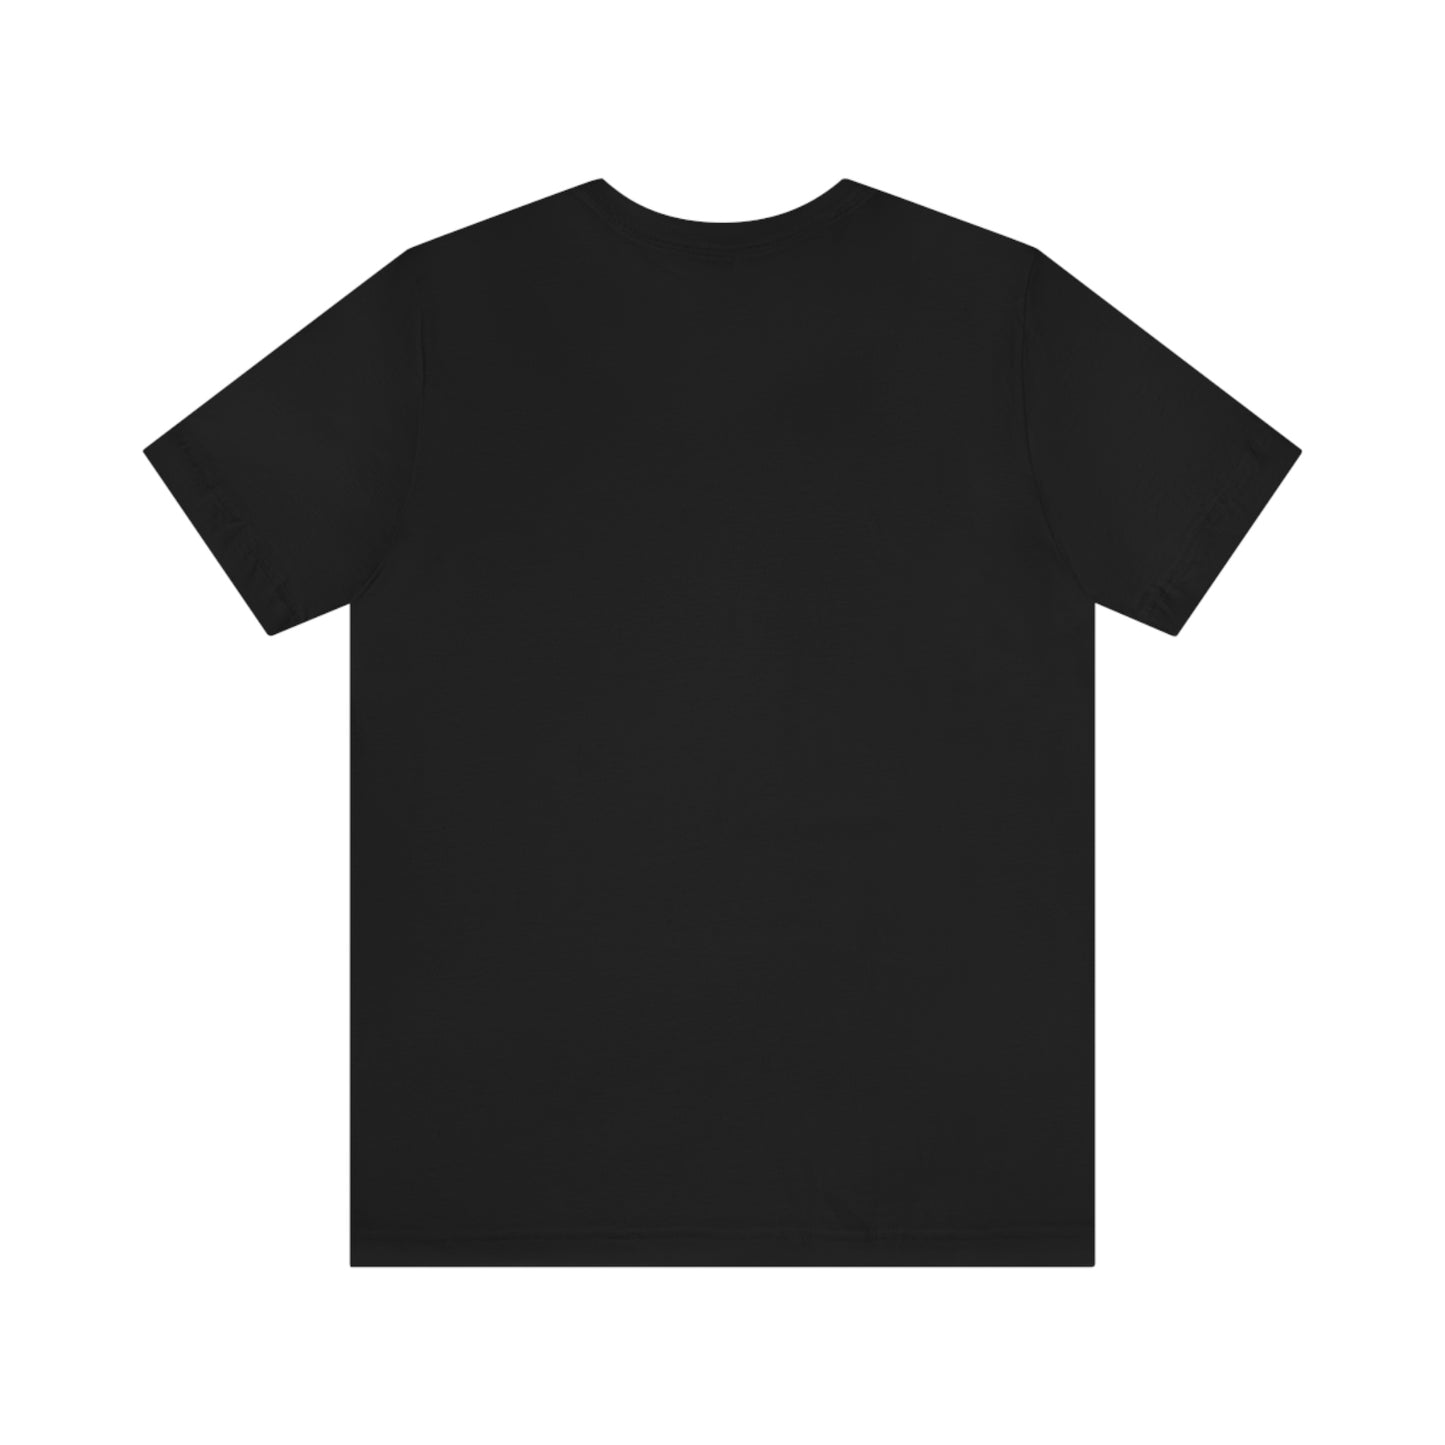 The Best Pre-Nap Workout Unisex Jersey Short Sleeve Tee | “Happy Cat” Tee Shirt